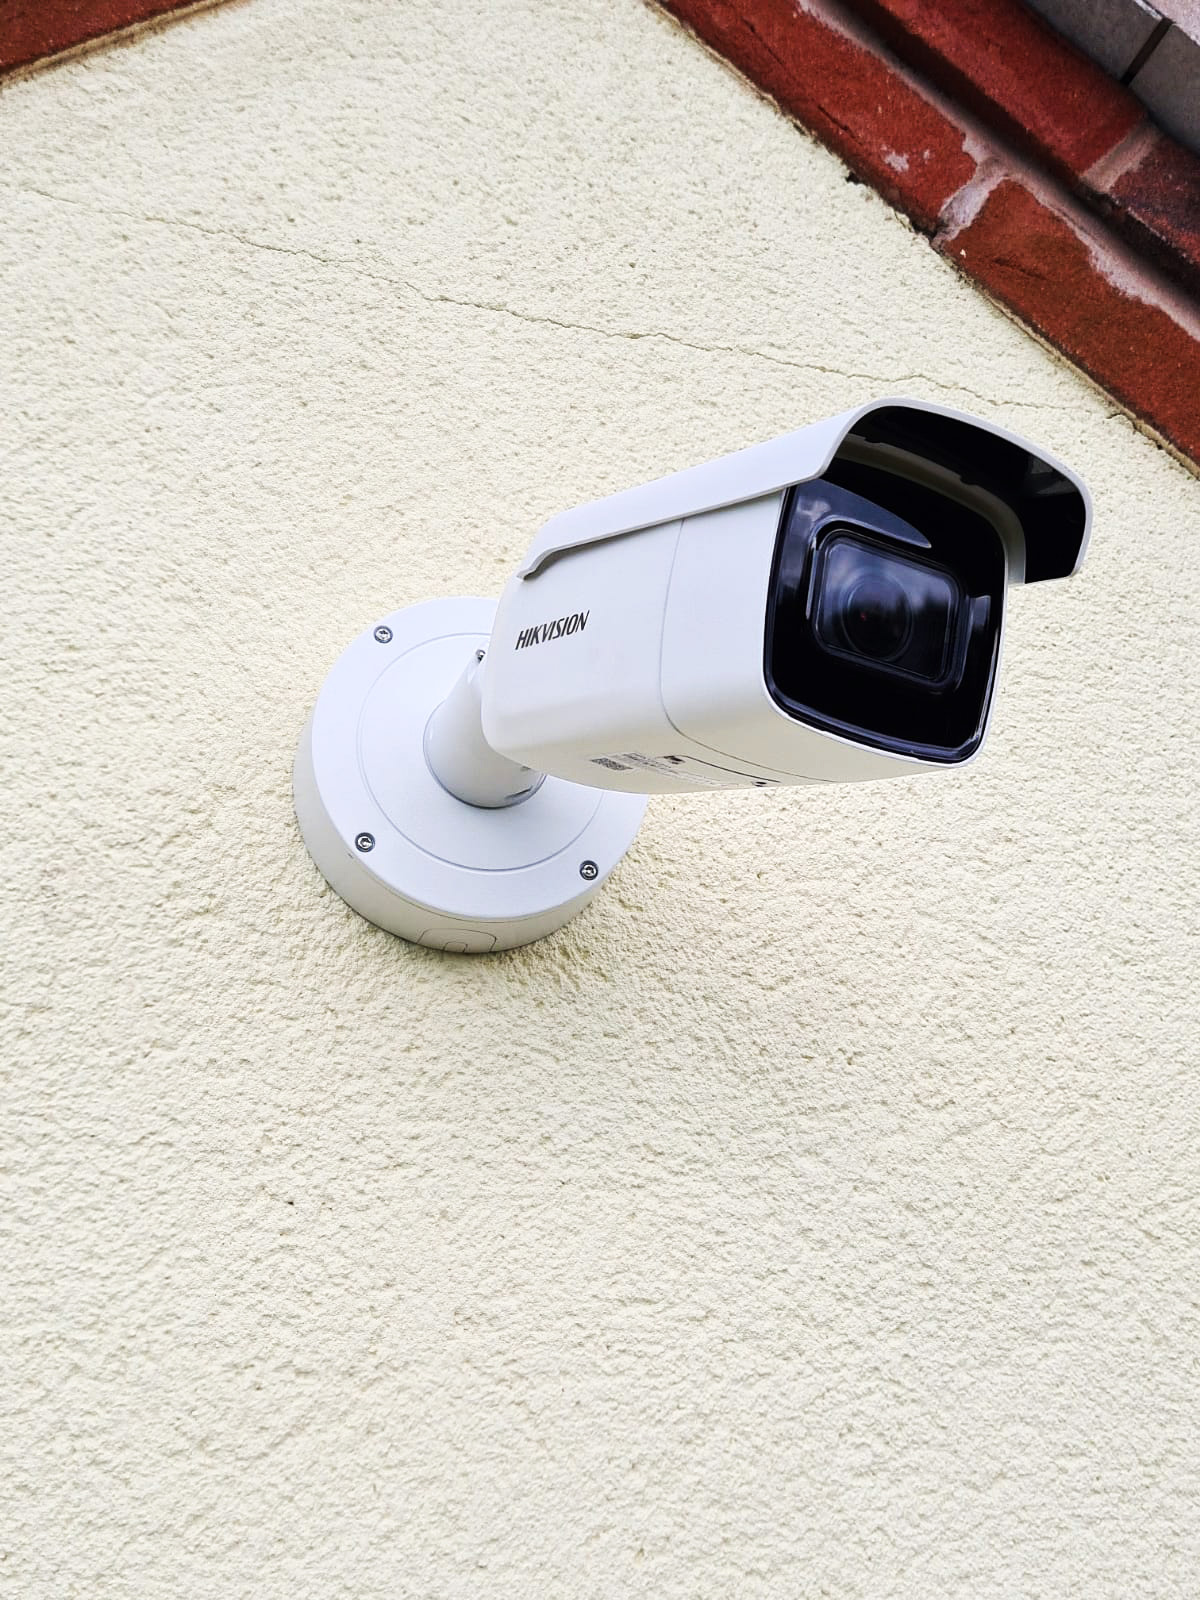 CCTV Services